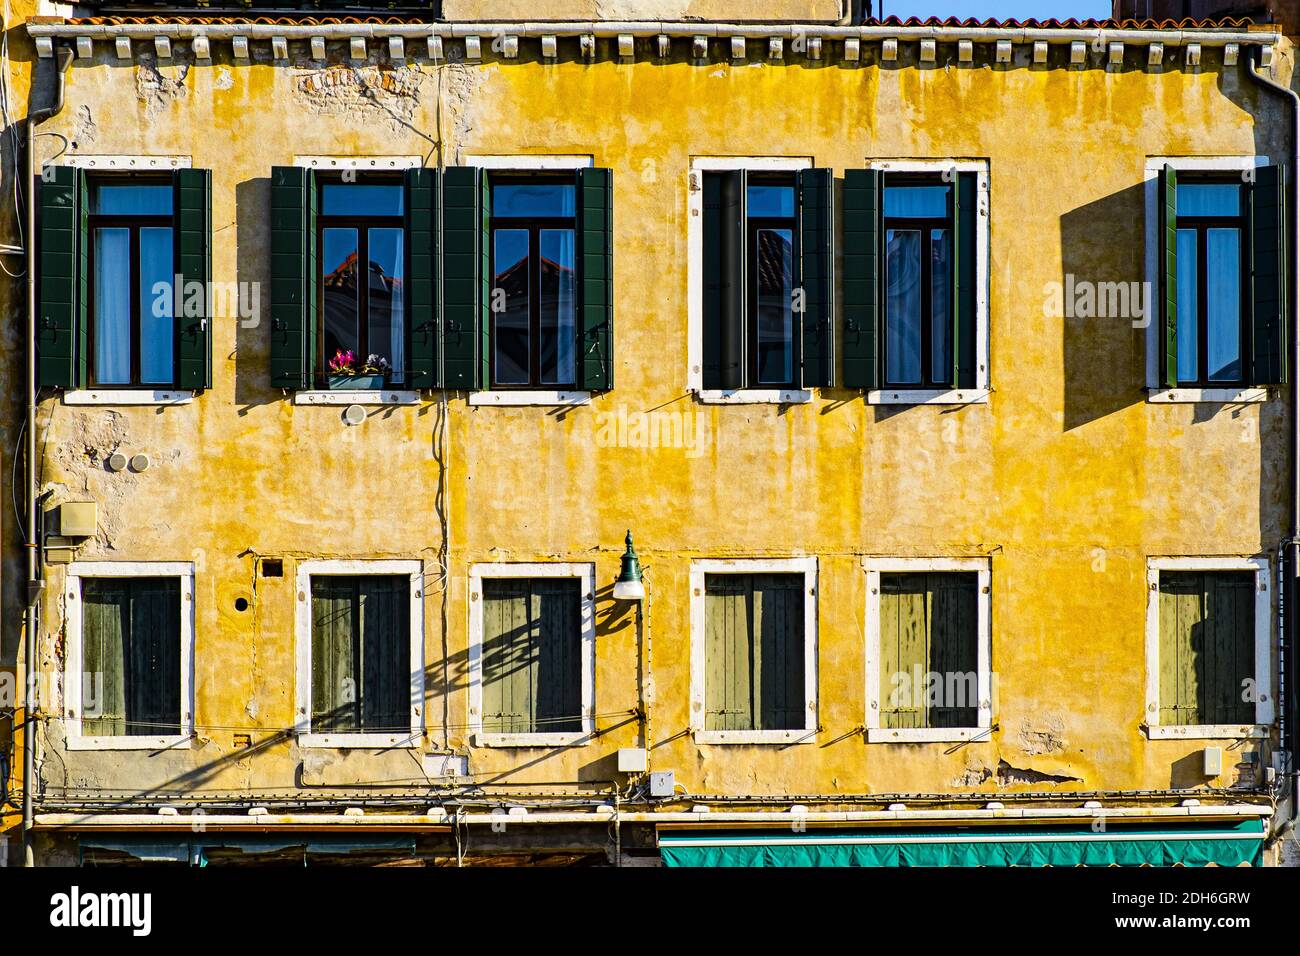 Italian culture on Venetian facades. Stock Photo